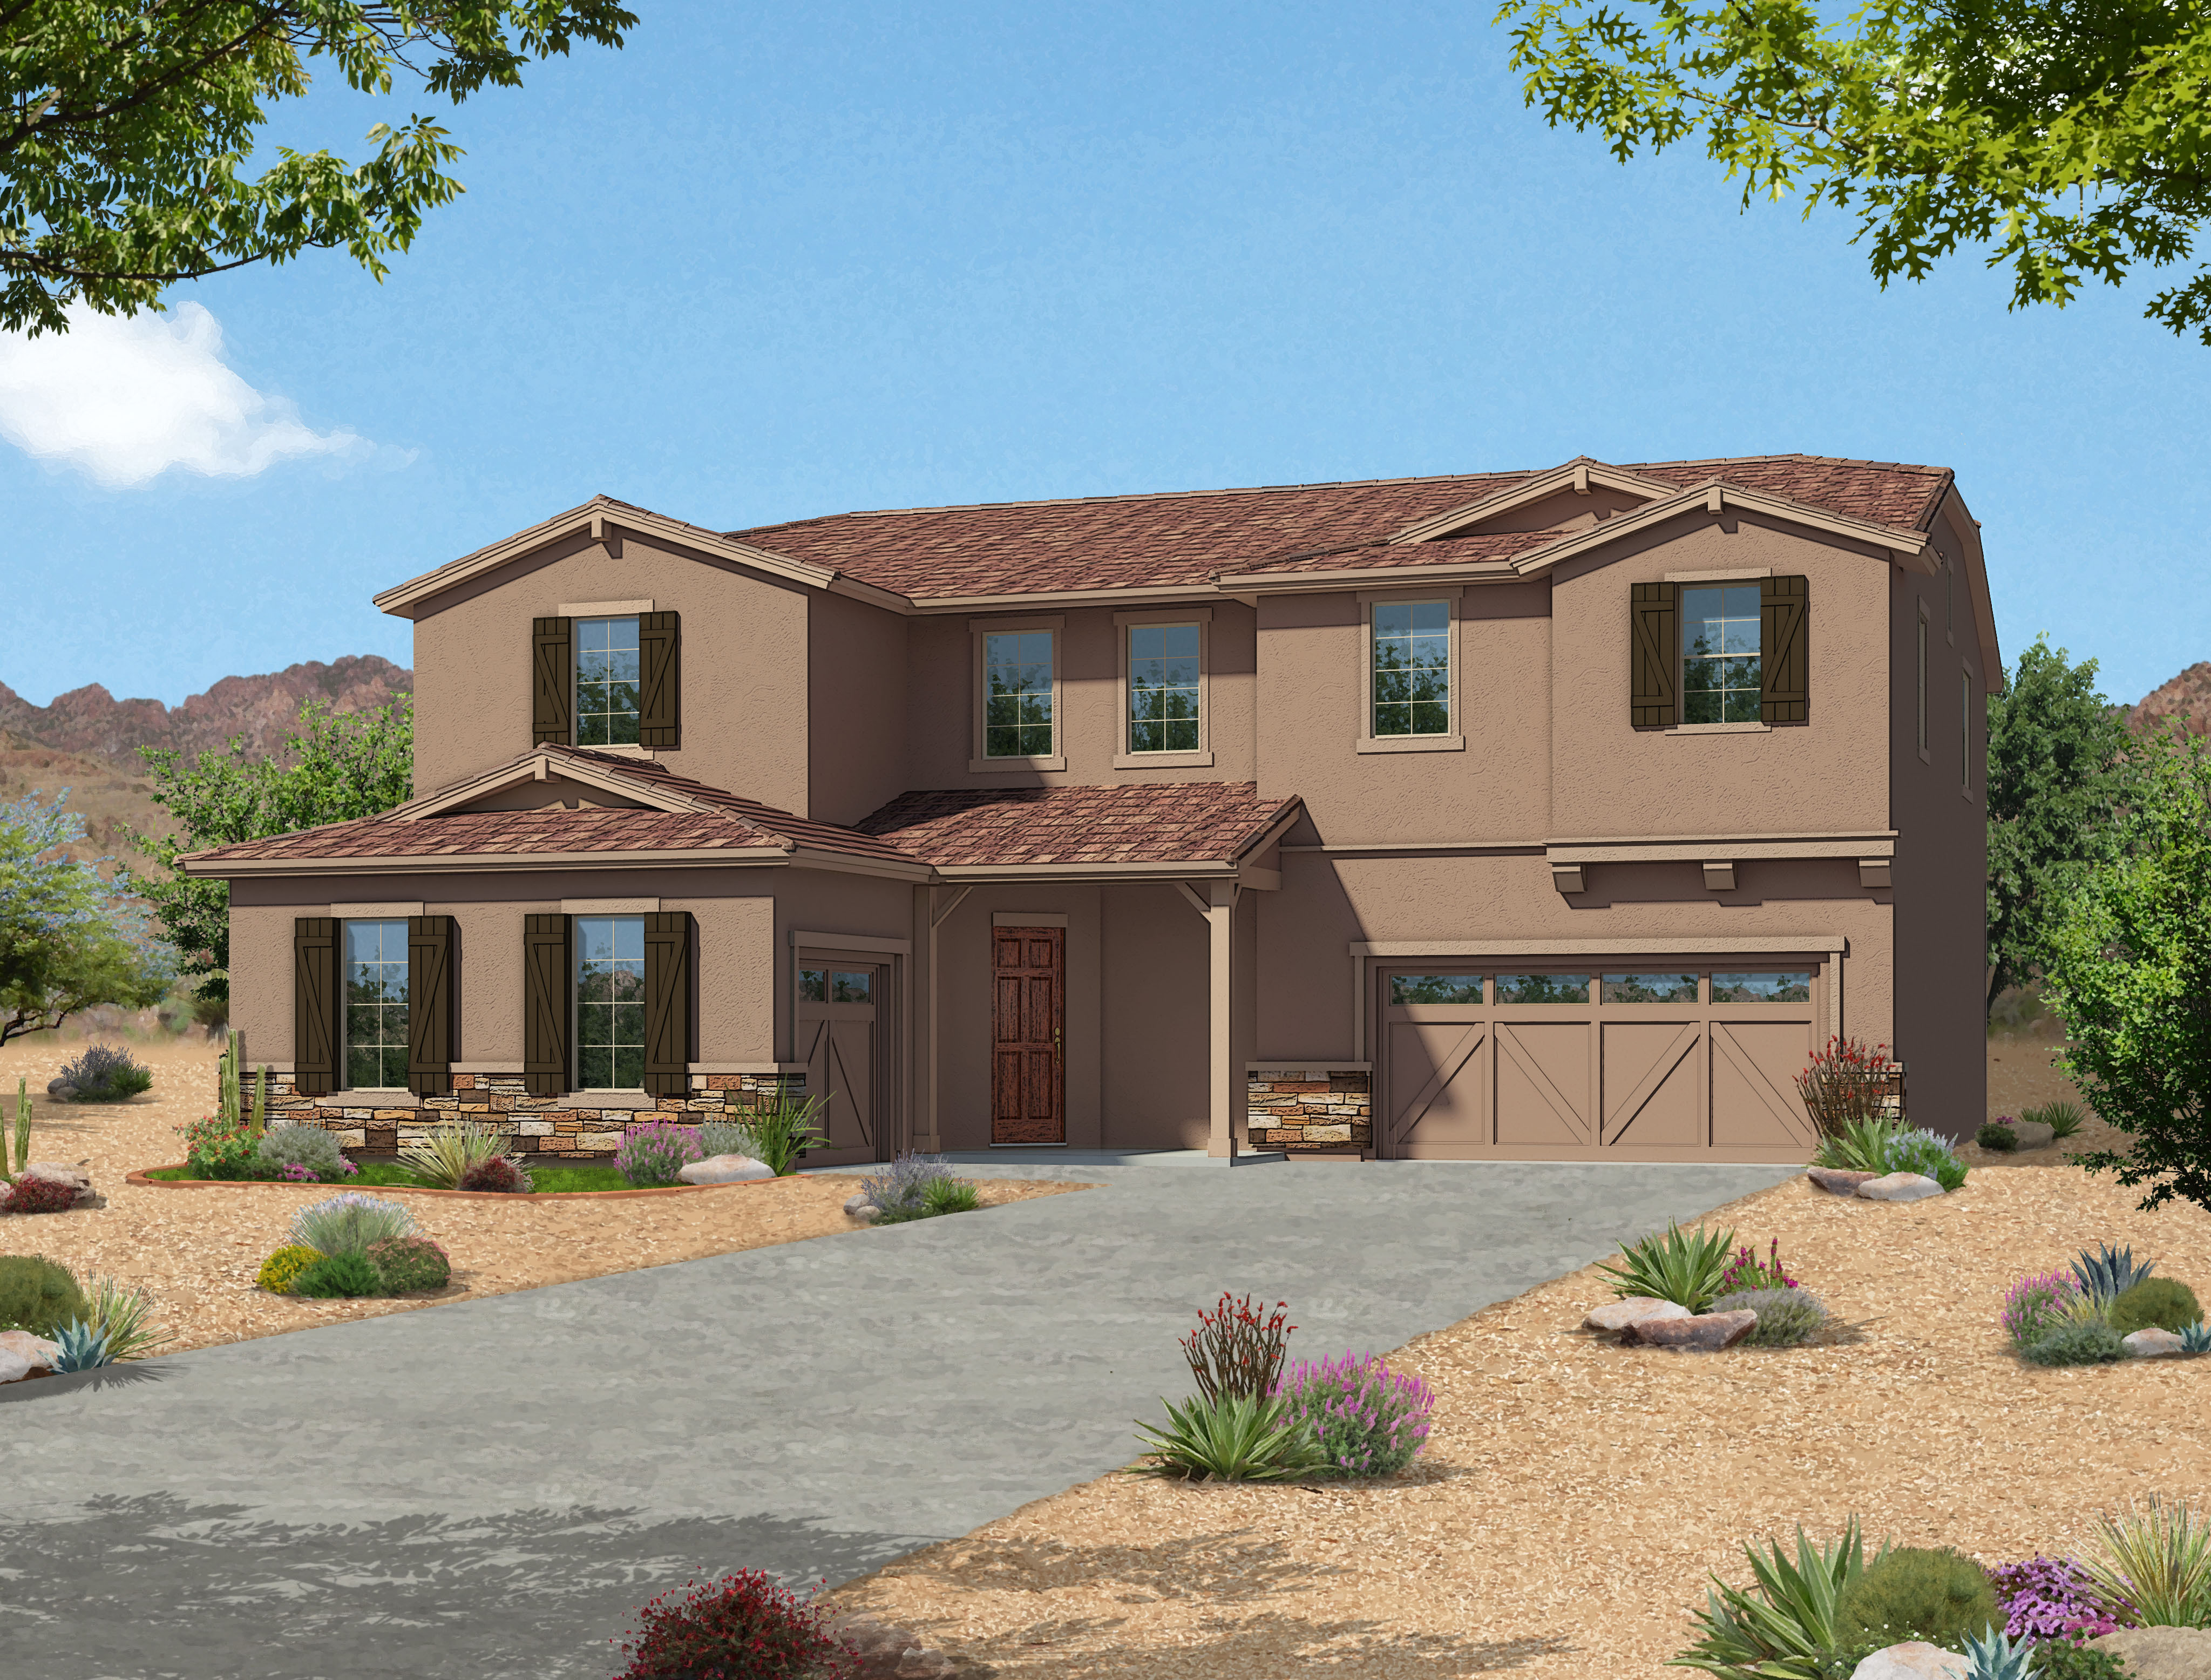 Texas Homebuilder Gehan Homes Continues Expansion Into Arizona